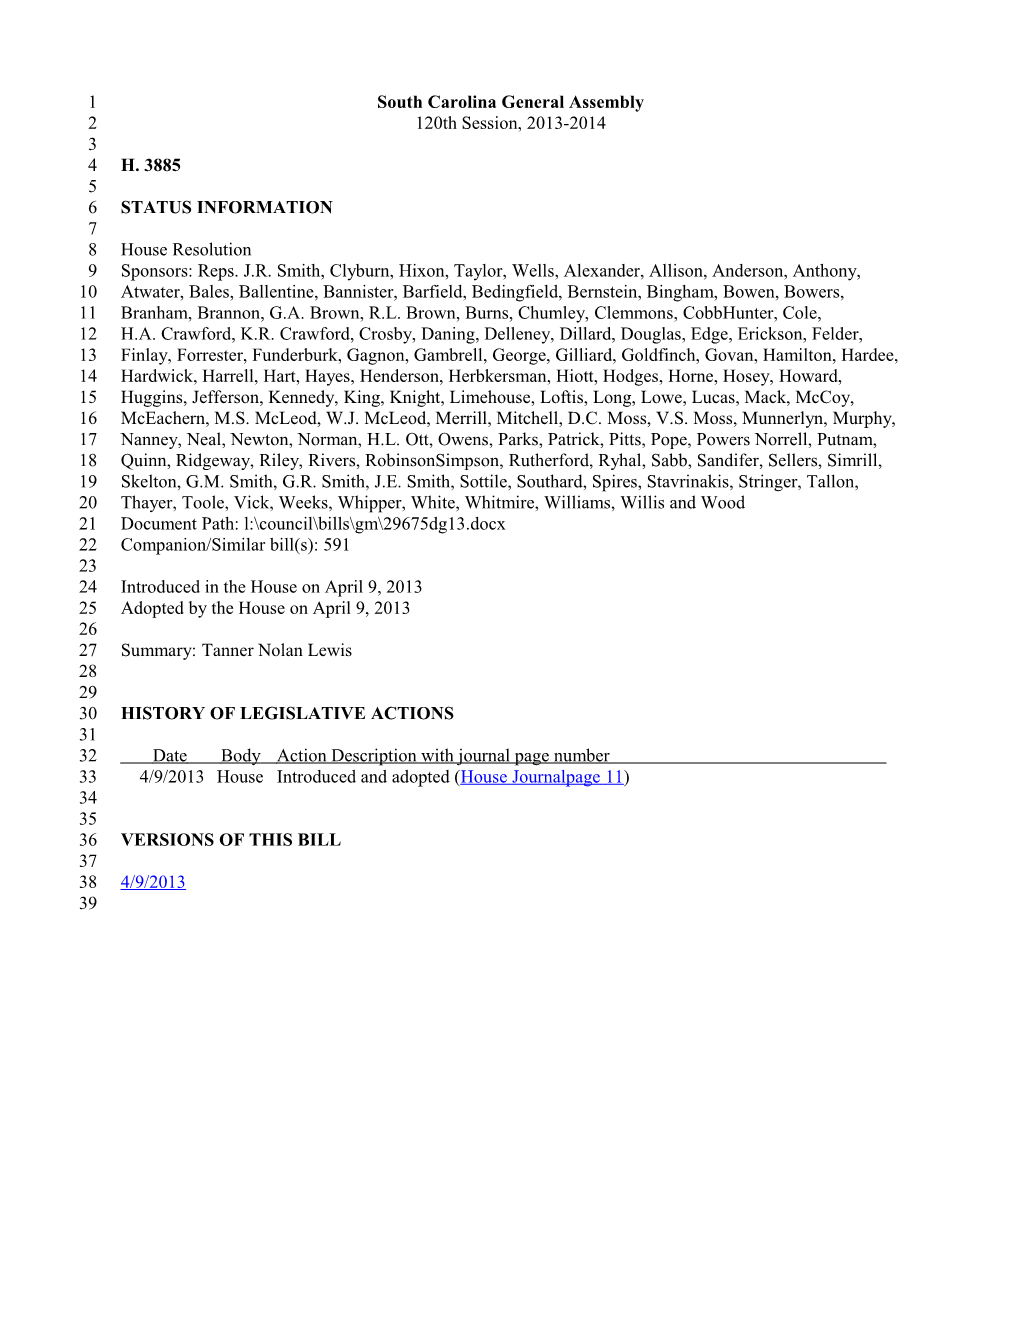 2013-2014 Bill 3885: Tanner Nolan Lewis - South Carolina Legislature Online